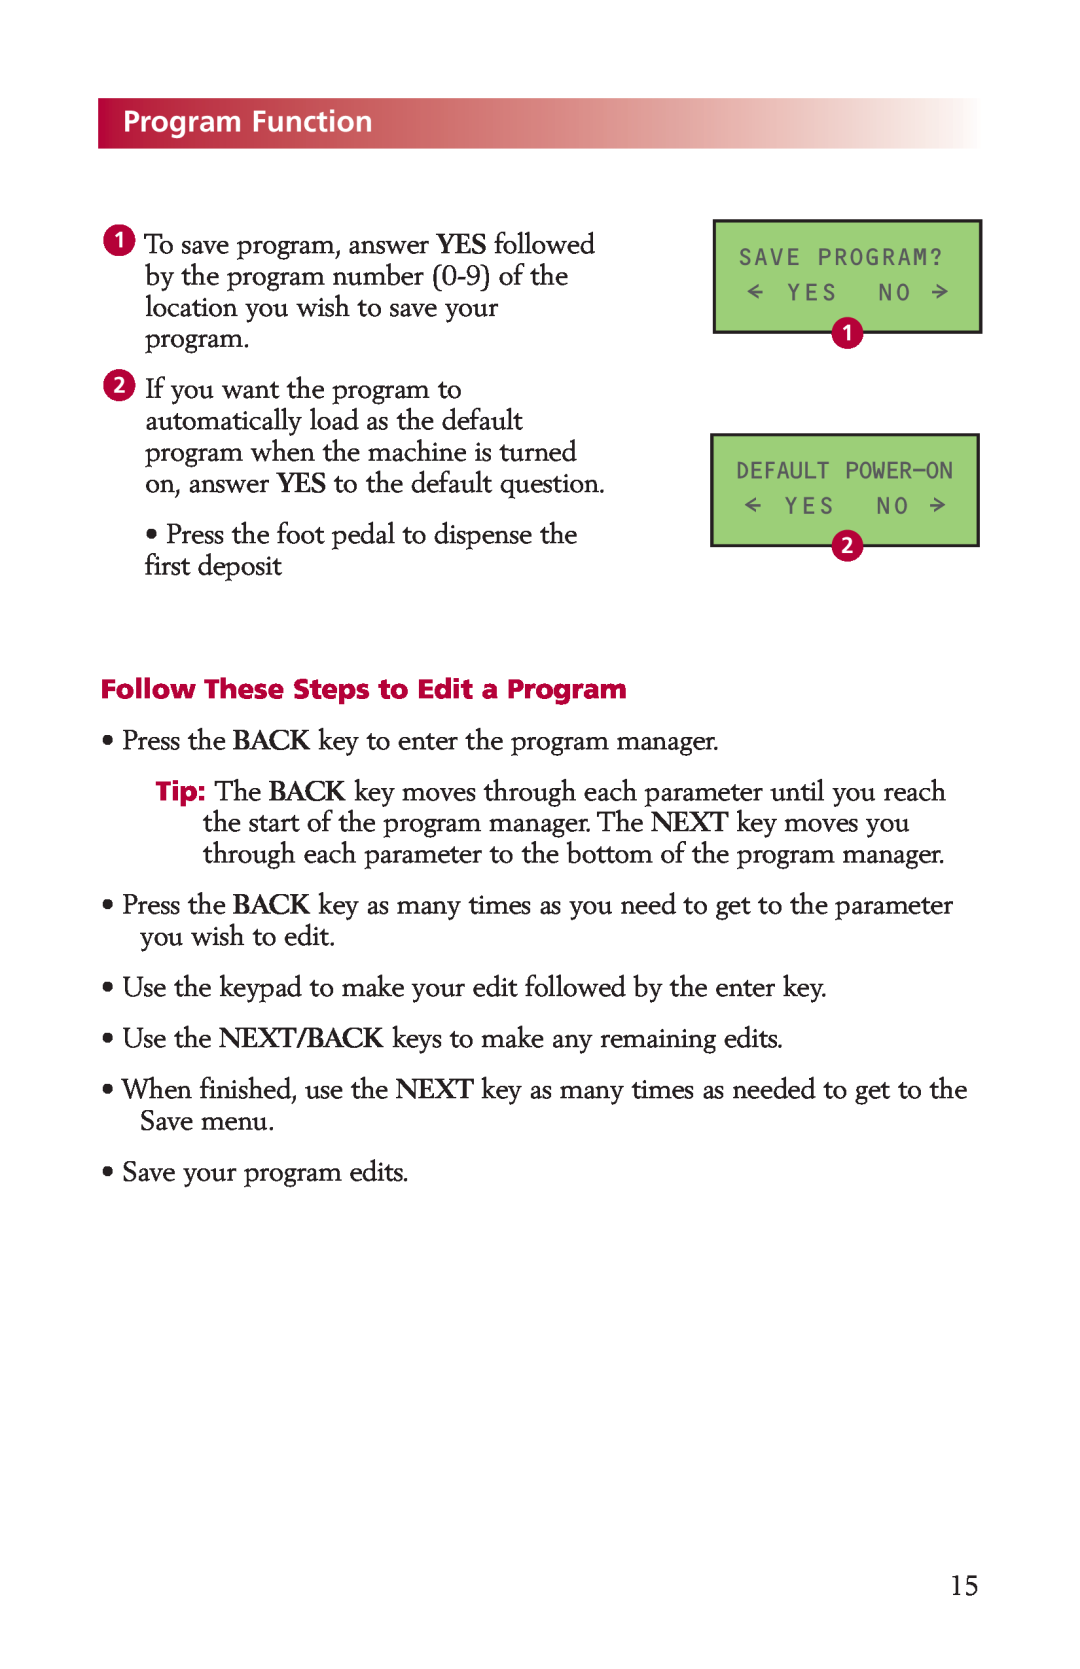 Fishman LDS9000 manual ProgramFunction, Follow These Steps to Edit a Program 